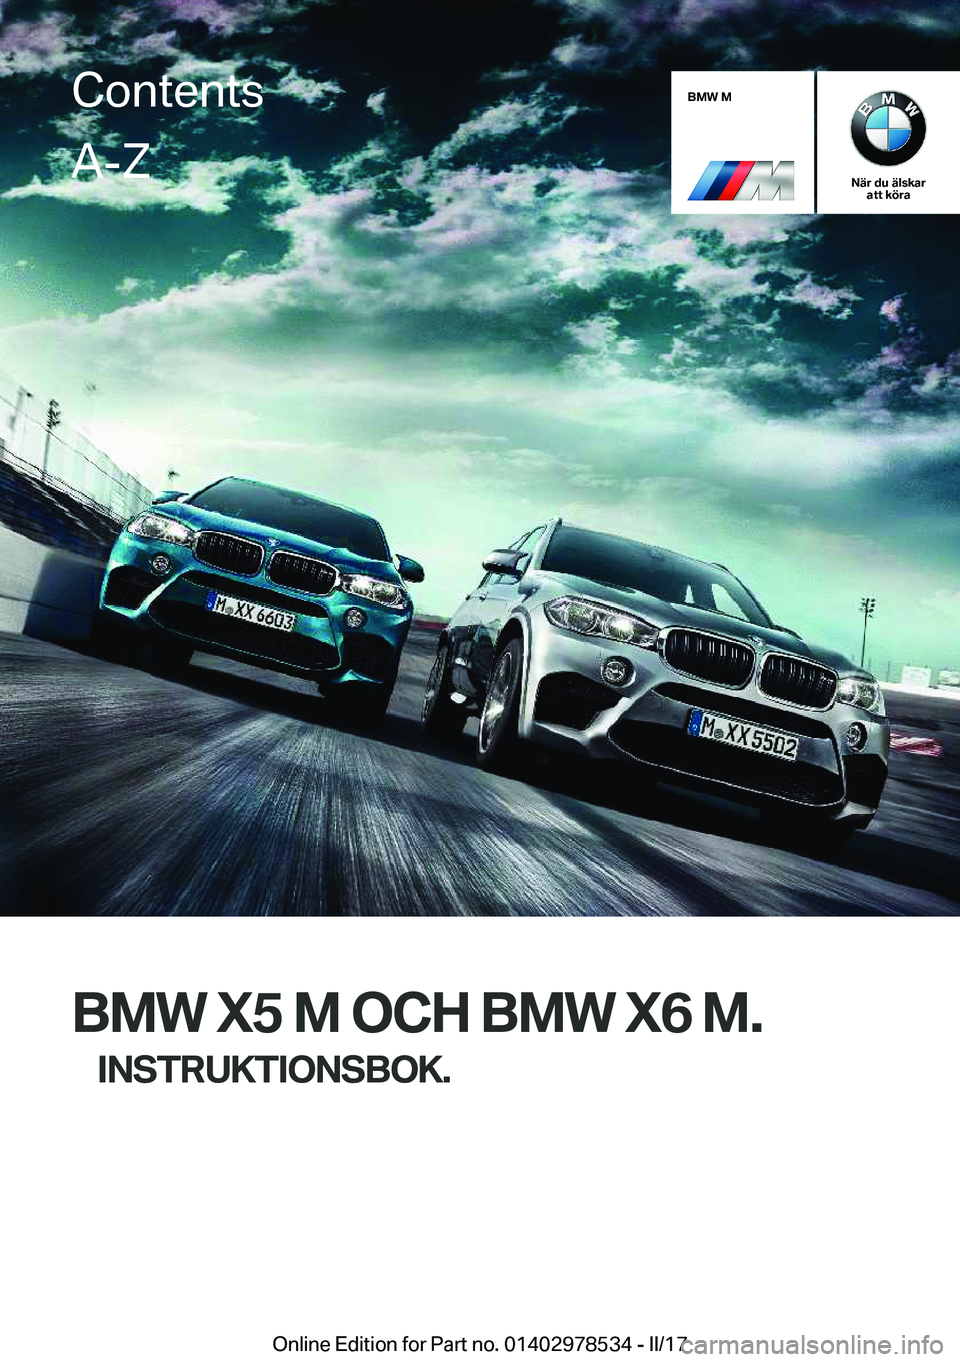 BMW X6 M 2017  InstruktionsbÖcker (in Swedish) �B�M�W��M
�N�ä�r��d�u��ä�l�s�k�a�r�a�t�t��k�